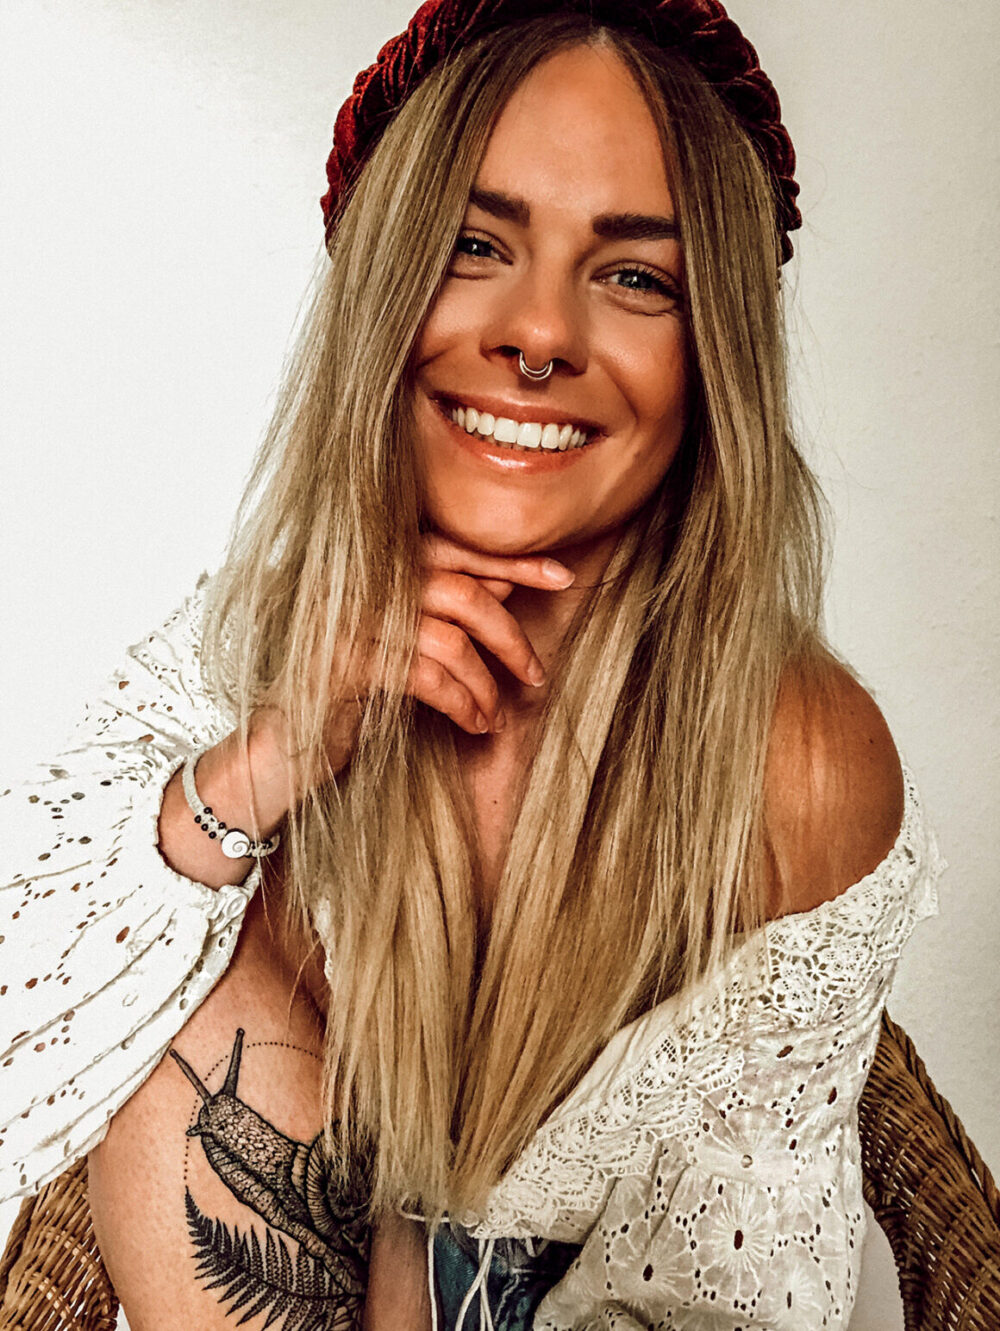 Anna Pompana, tattoo model